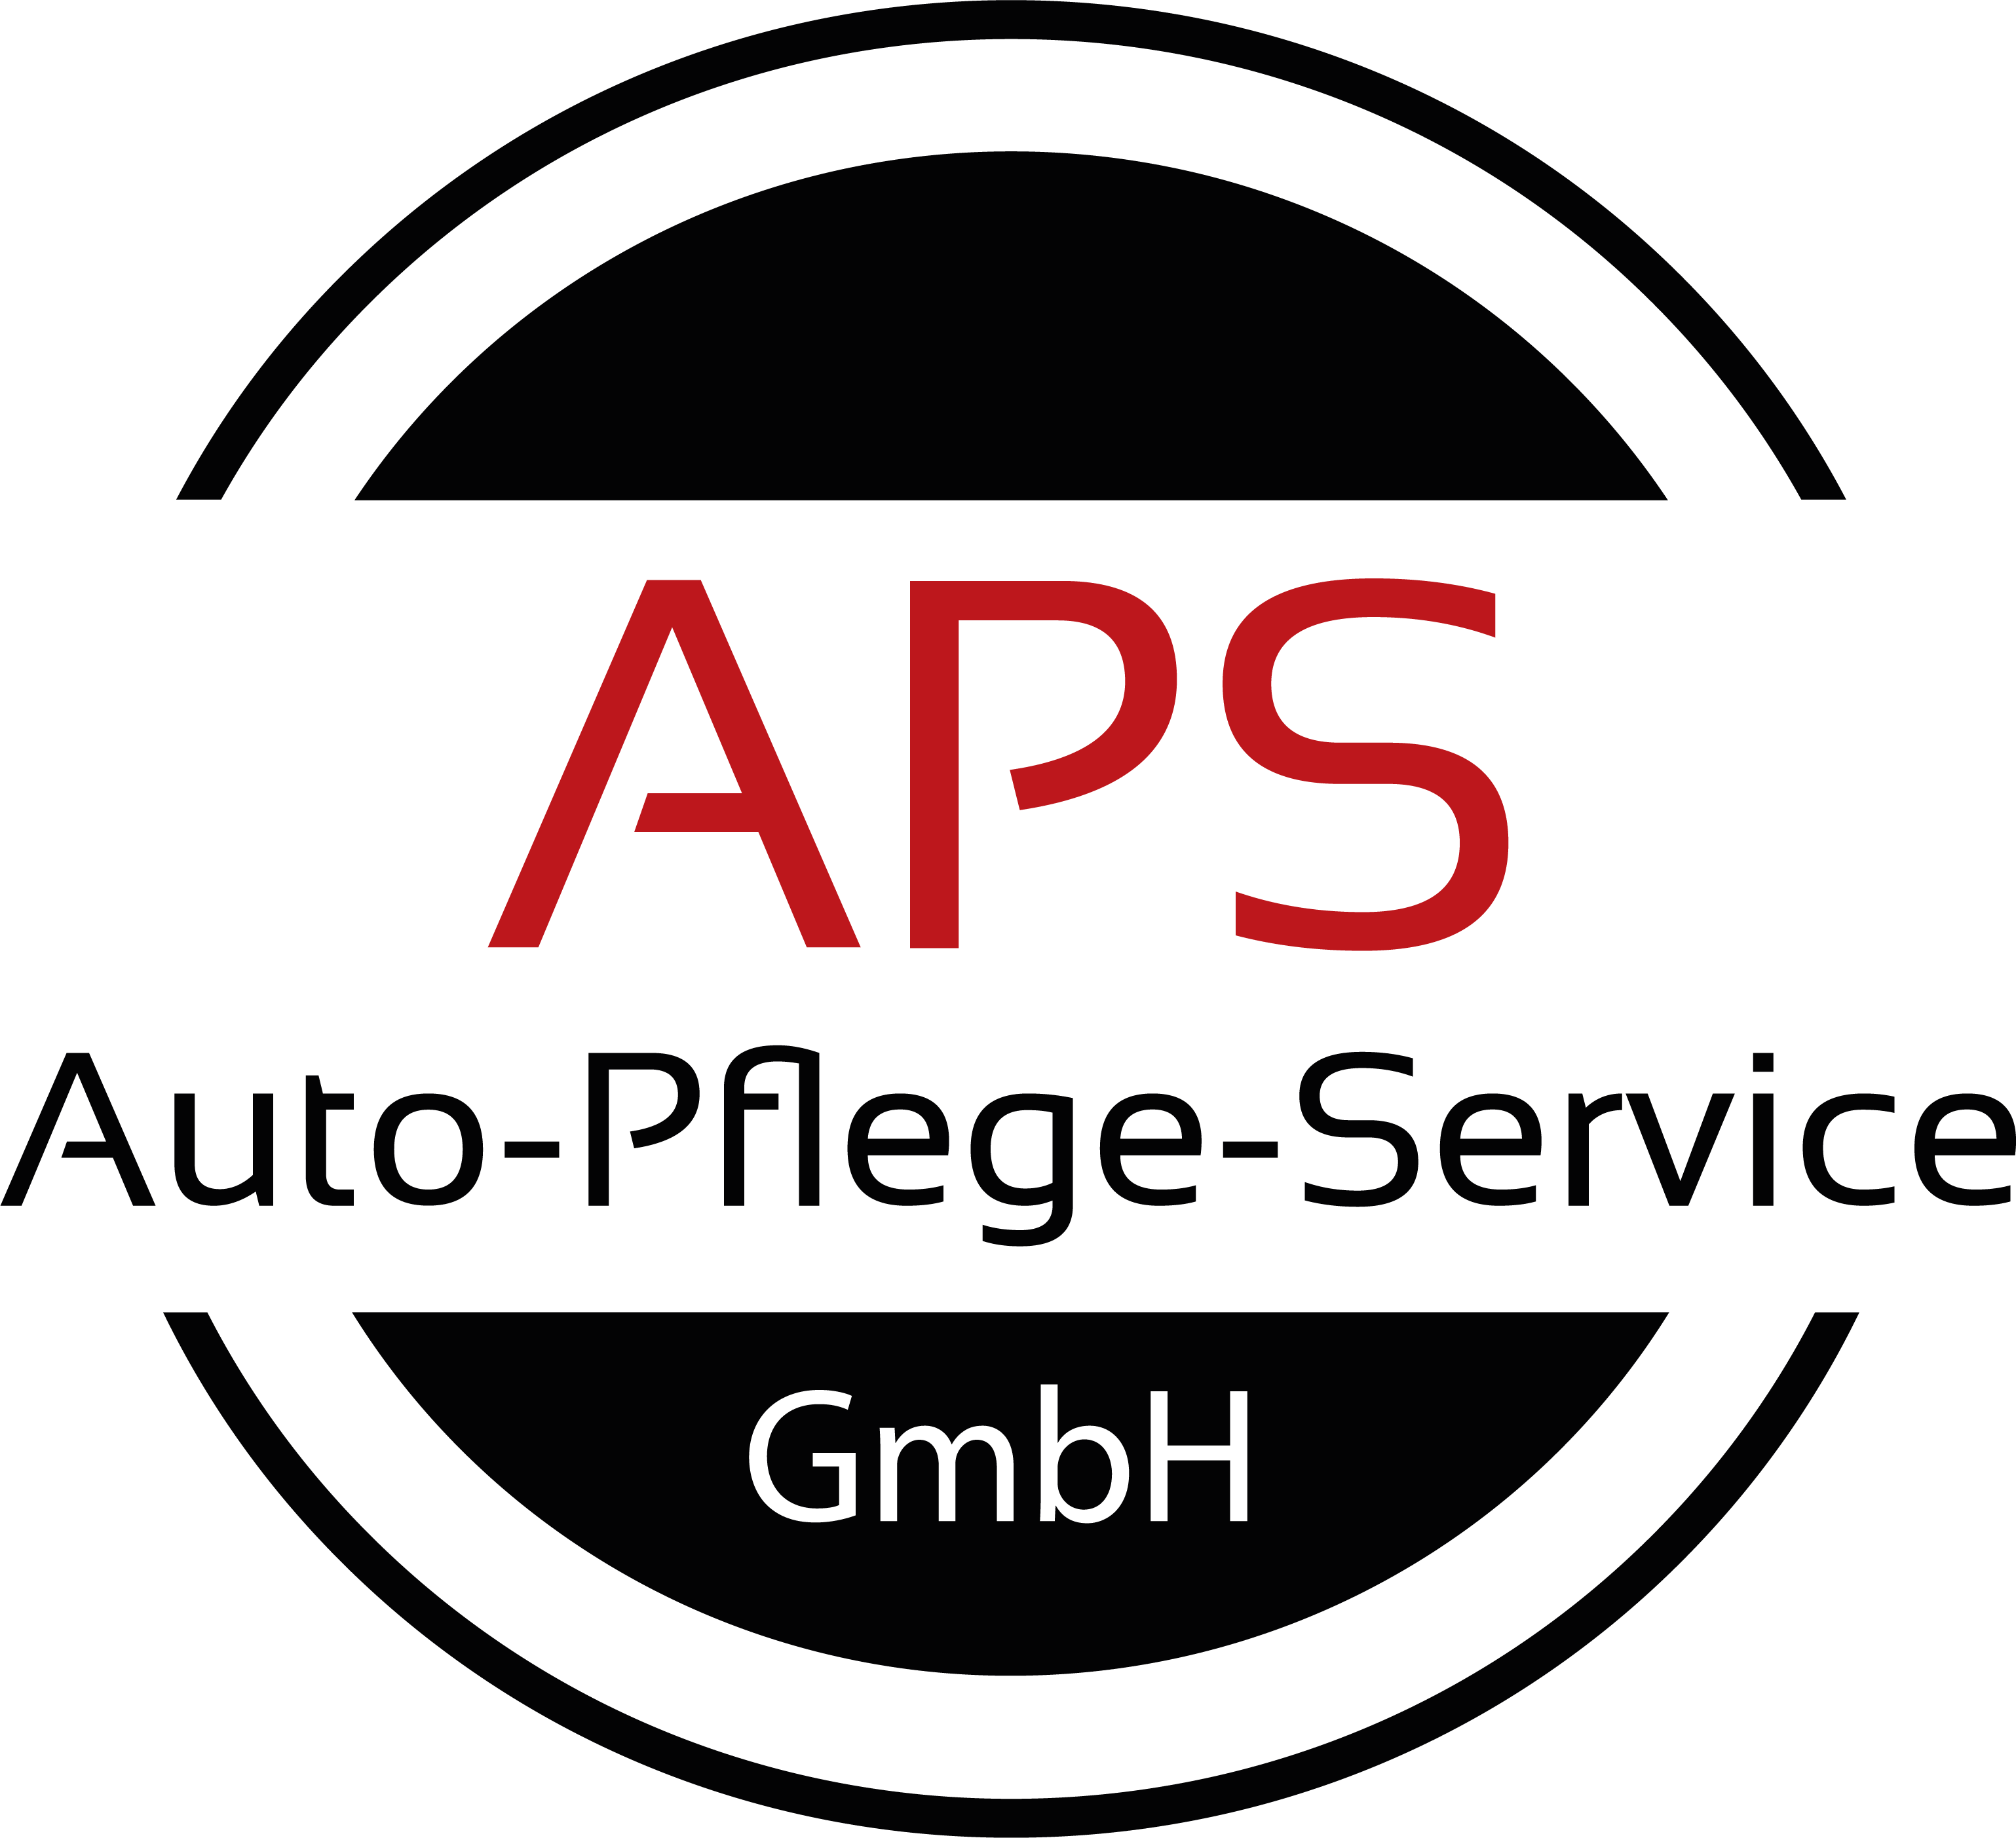 APS Auto-Pflege-Service GmbH